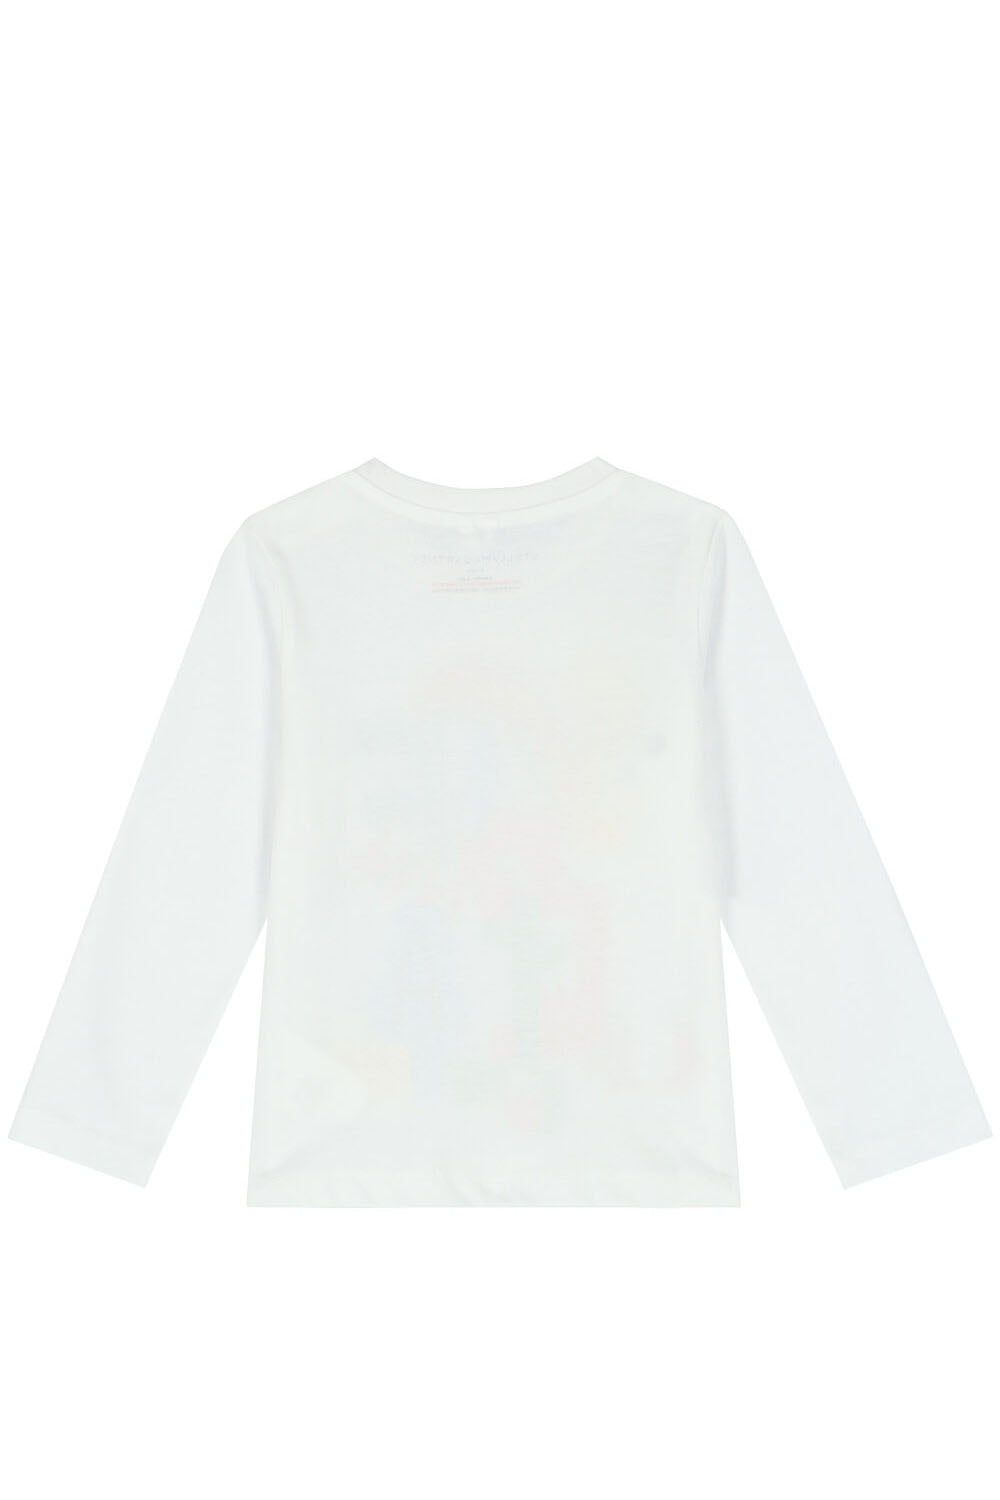 Baby Jersey T-Shirt W/Rainbow Stella for Girls - Maison7